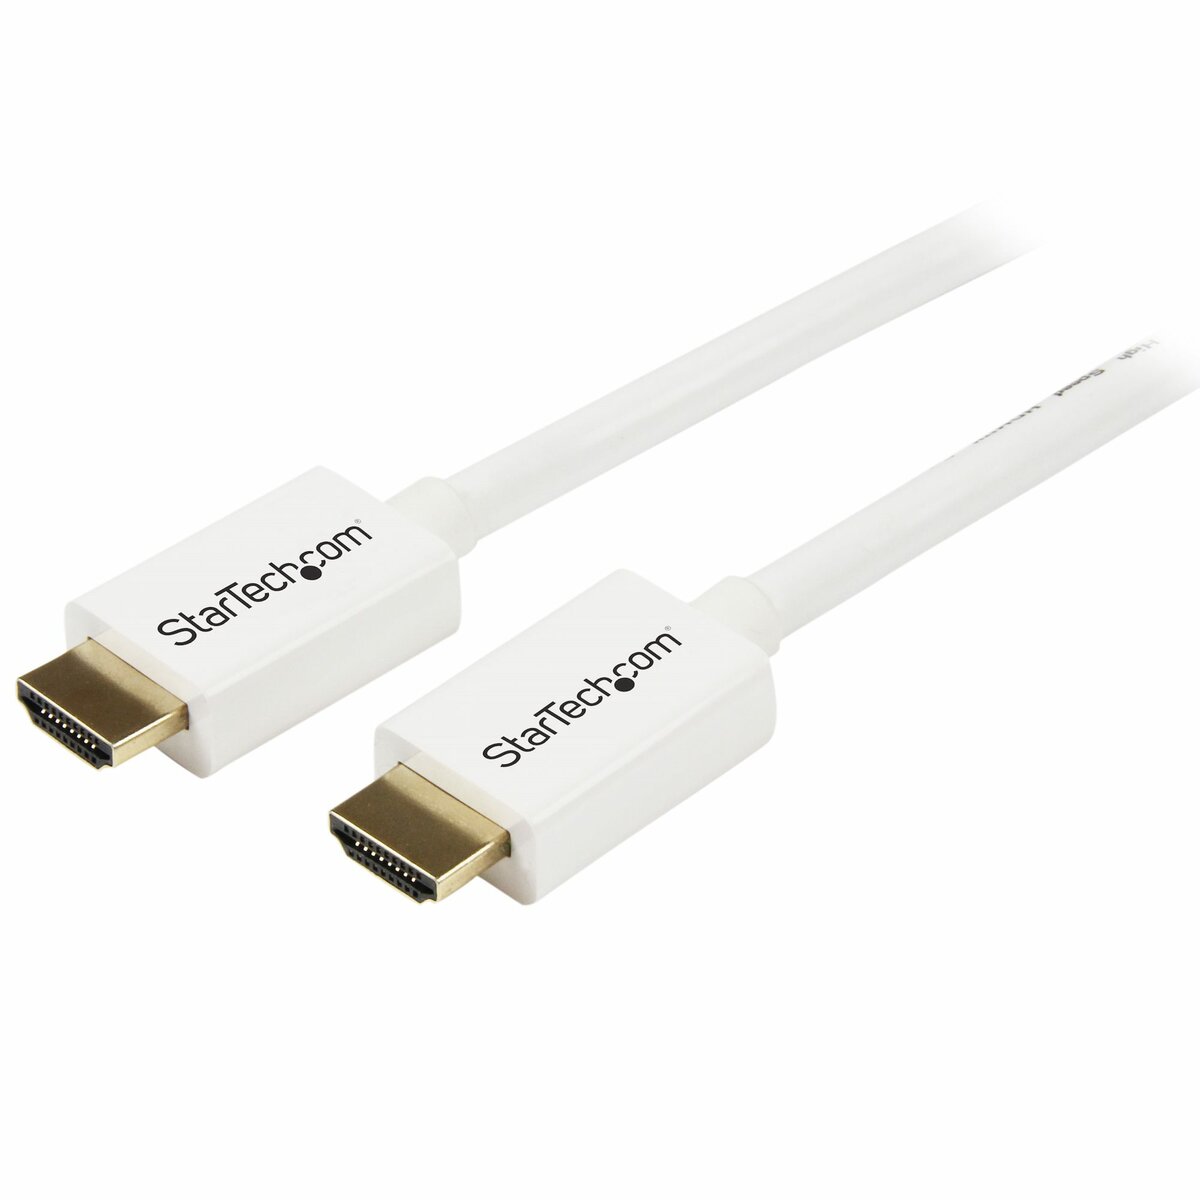 StarTech.com Câble d'extension / Rallonge HDMI Ultra HD 4k x 2k de 2m -  Cordon HDMI vers HDMI - M/F - Noir - Plaques or (HDEXT2M)